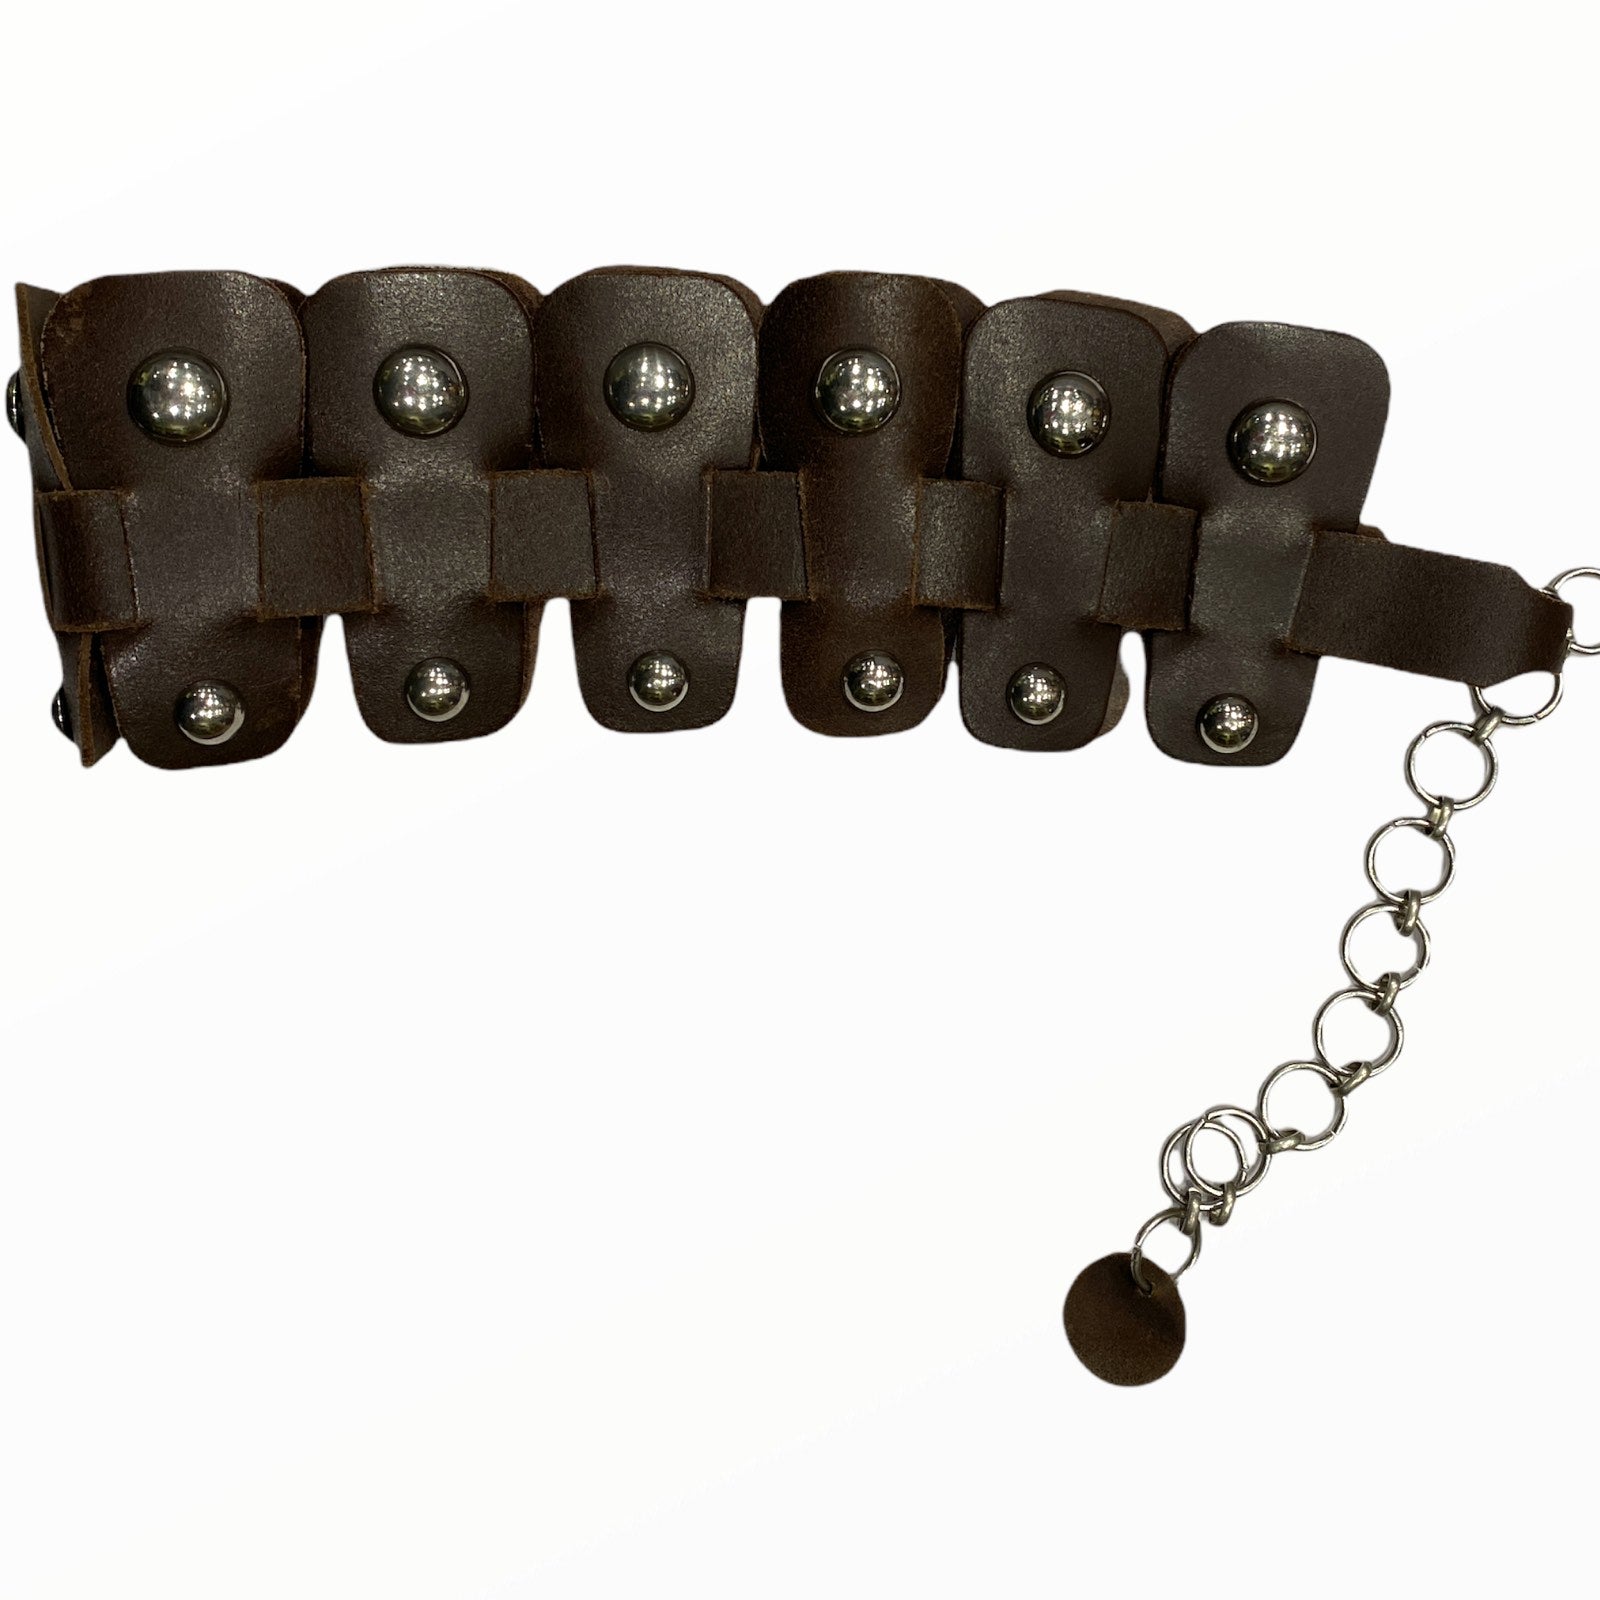 Dark brown leather belt with silver metals